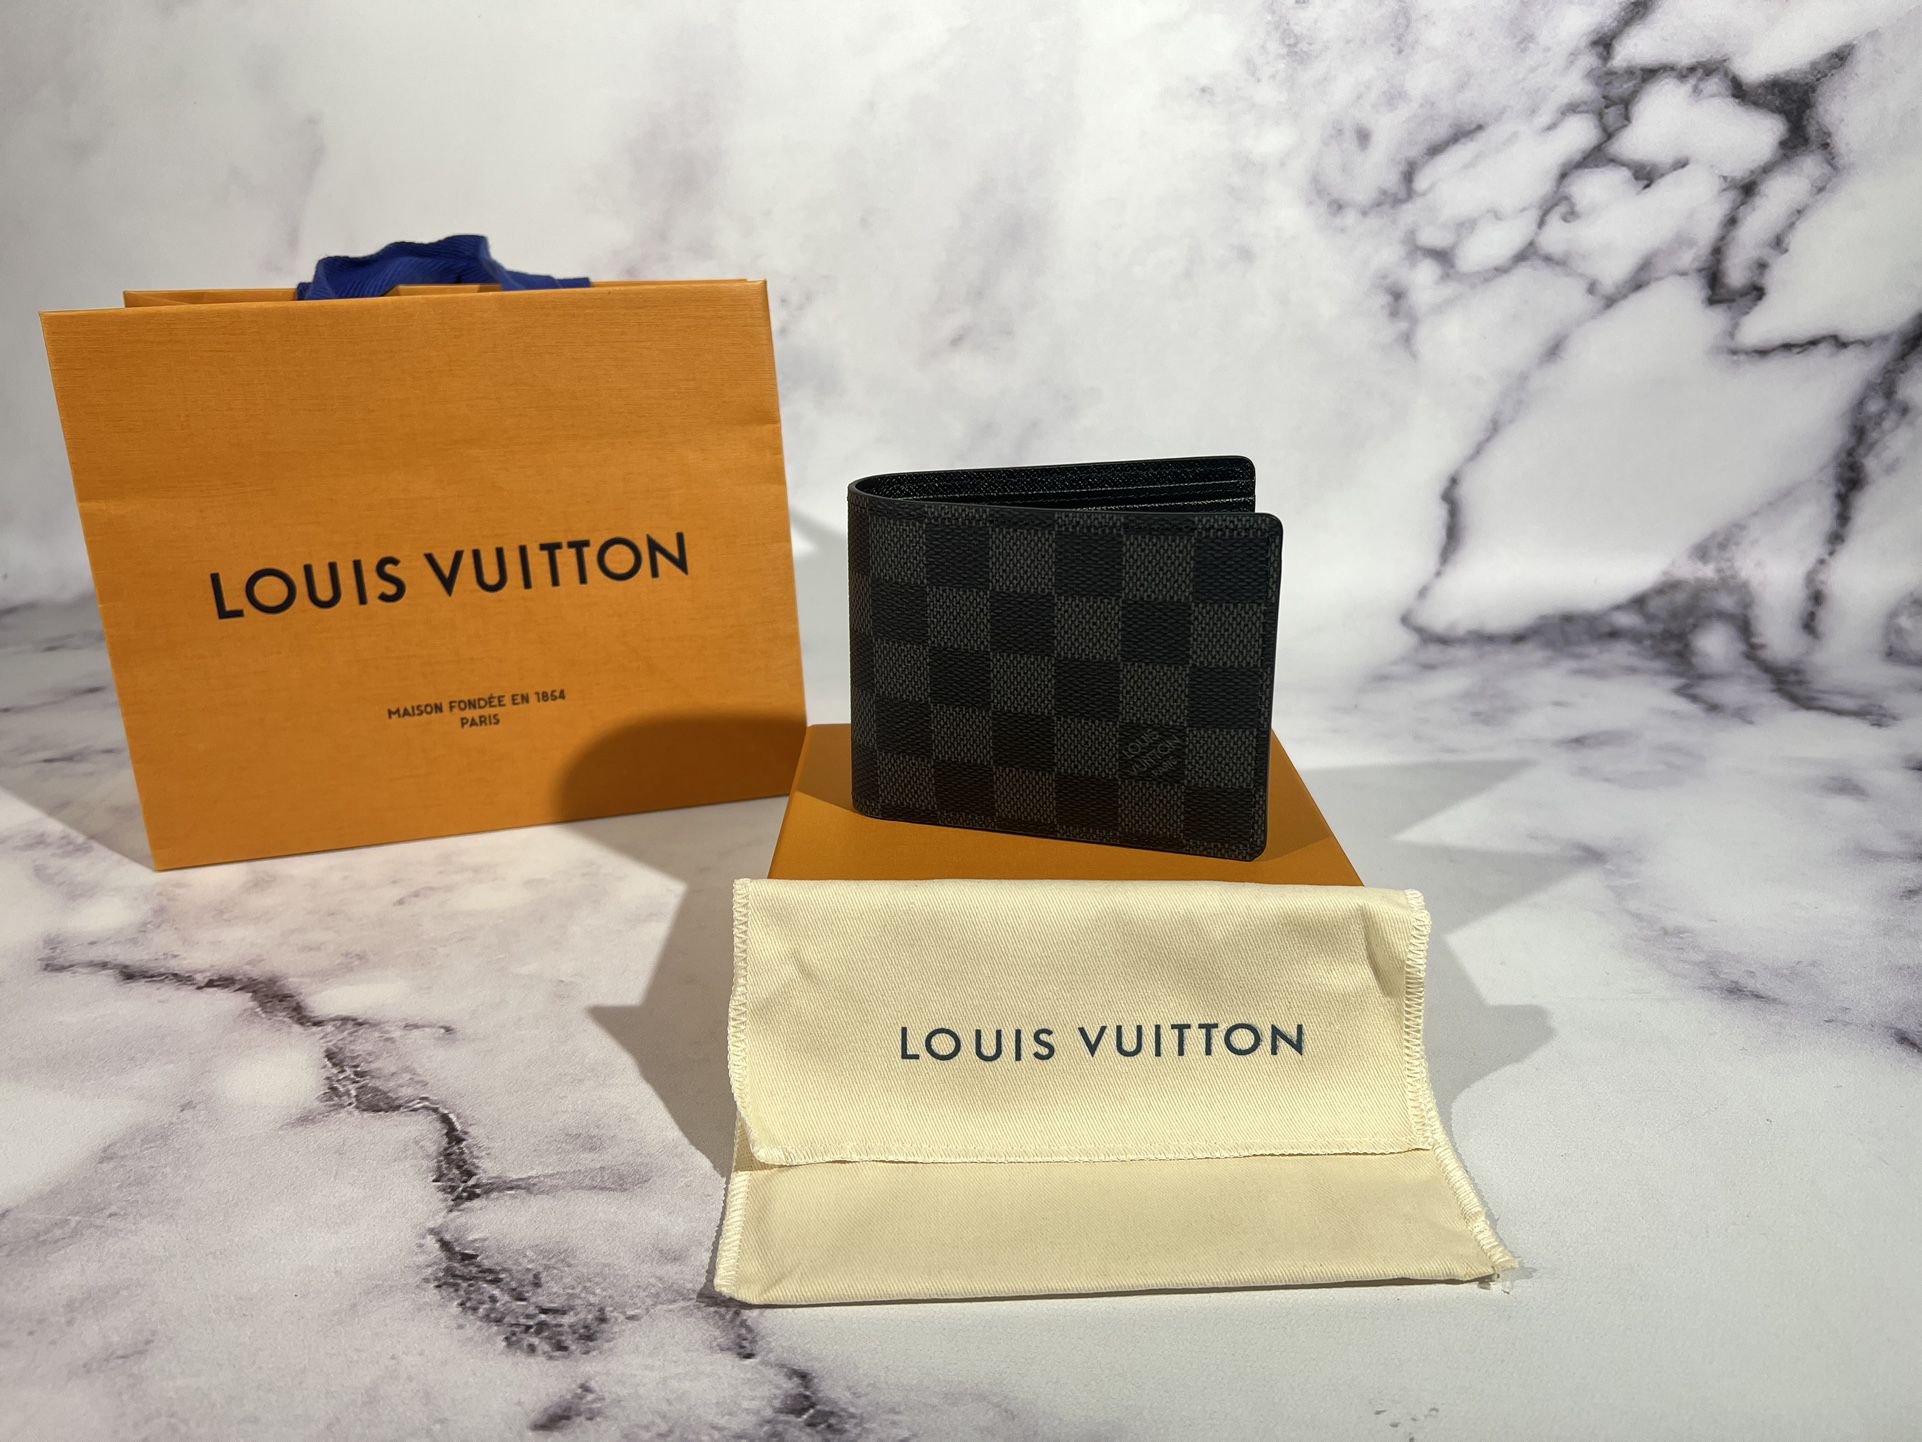 Men's Louis Vuitton Navy Blue Multiple Wallet for Sale in Brooklyn, NY -  OfferUp